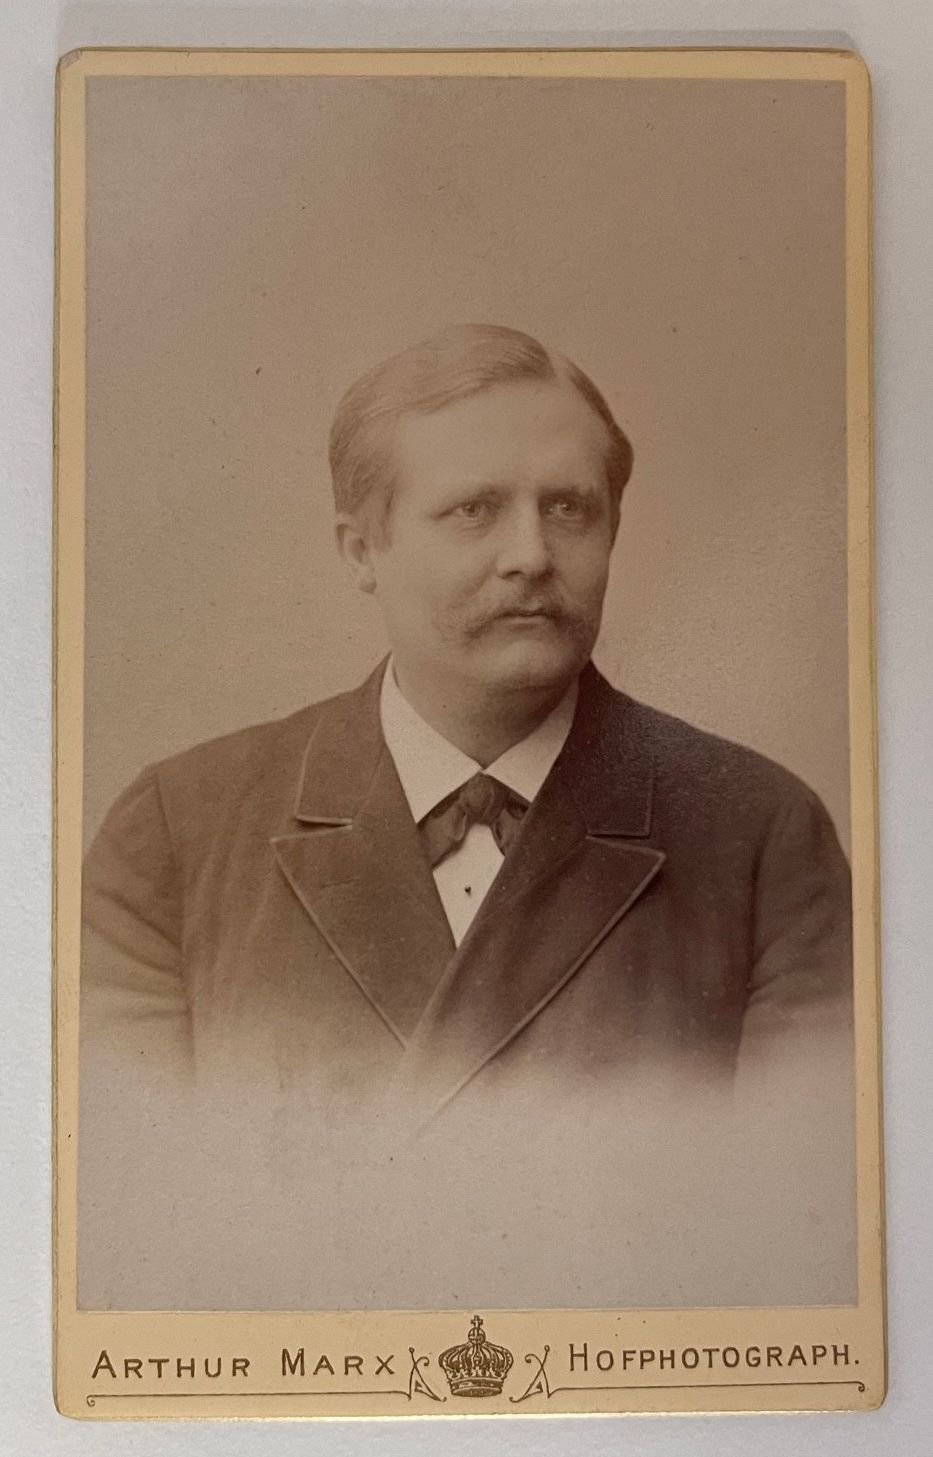 Fotografie, Arthur Marx, Frankfurt, Friedrich Naumann, ca. 1895. (Taunus-Rhein-Main - Regionalgeschichtliche Sammlung Dr. Stefan Naas CC BY-NC-SA)